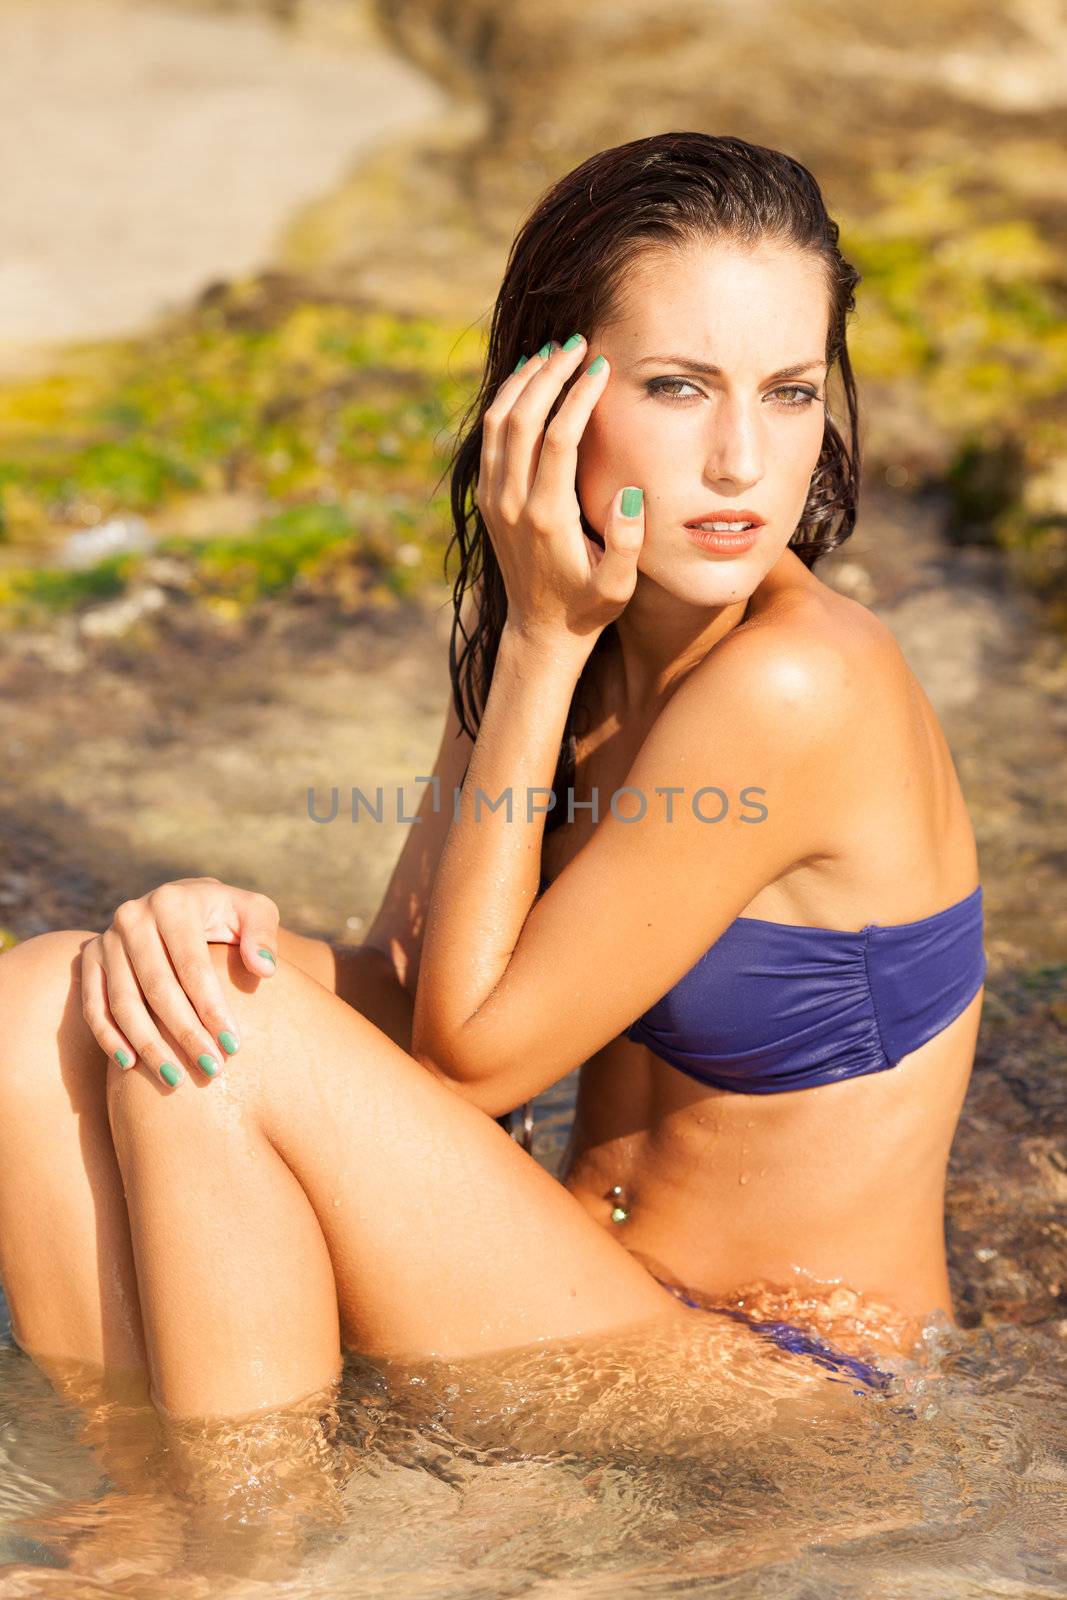 Portrait of sexy model enjoying a bath in the ocean with rocks